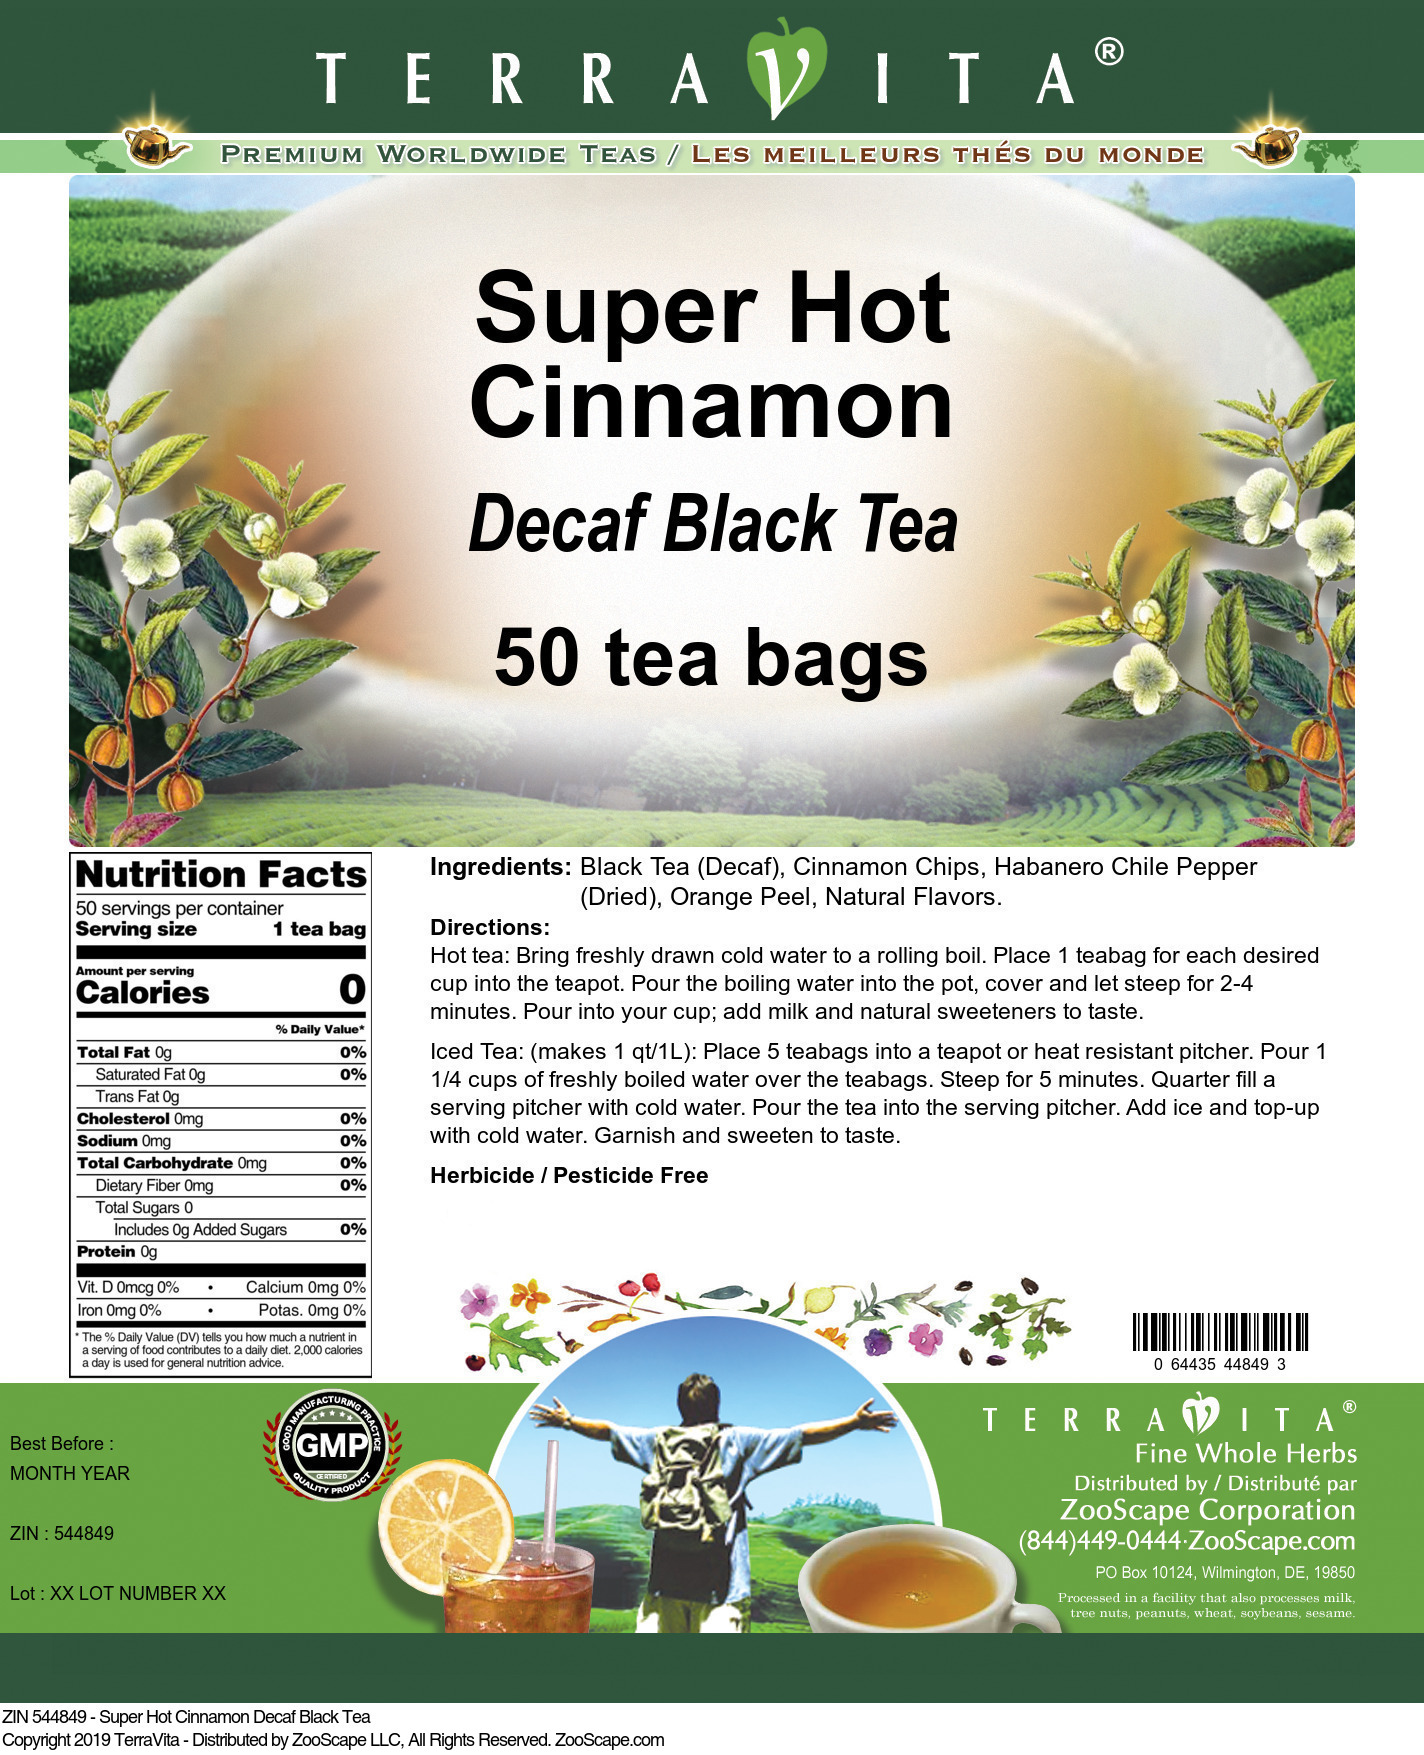 Super Hot Cinnamon Decaf Black Tea - Label